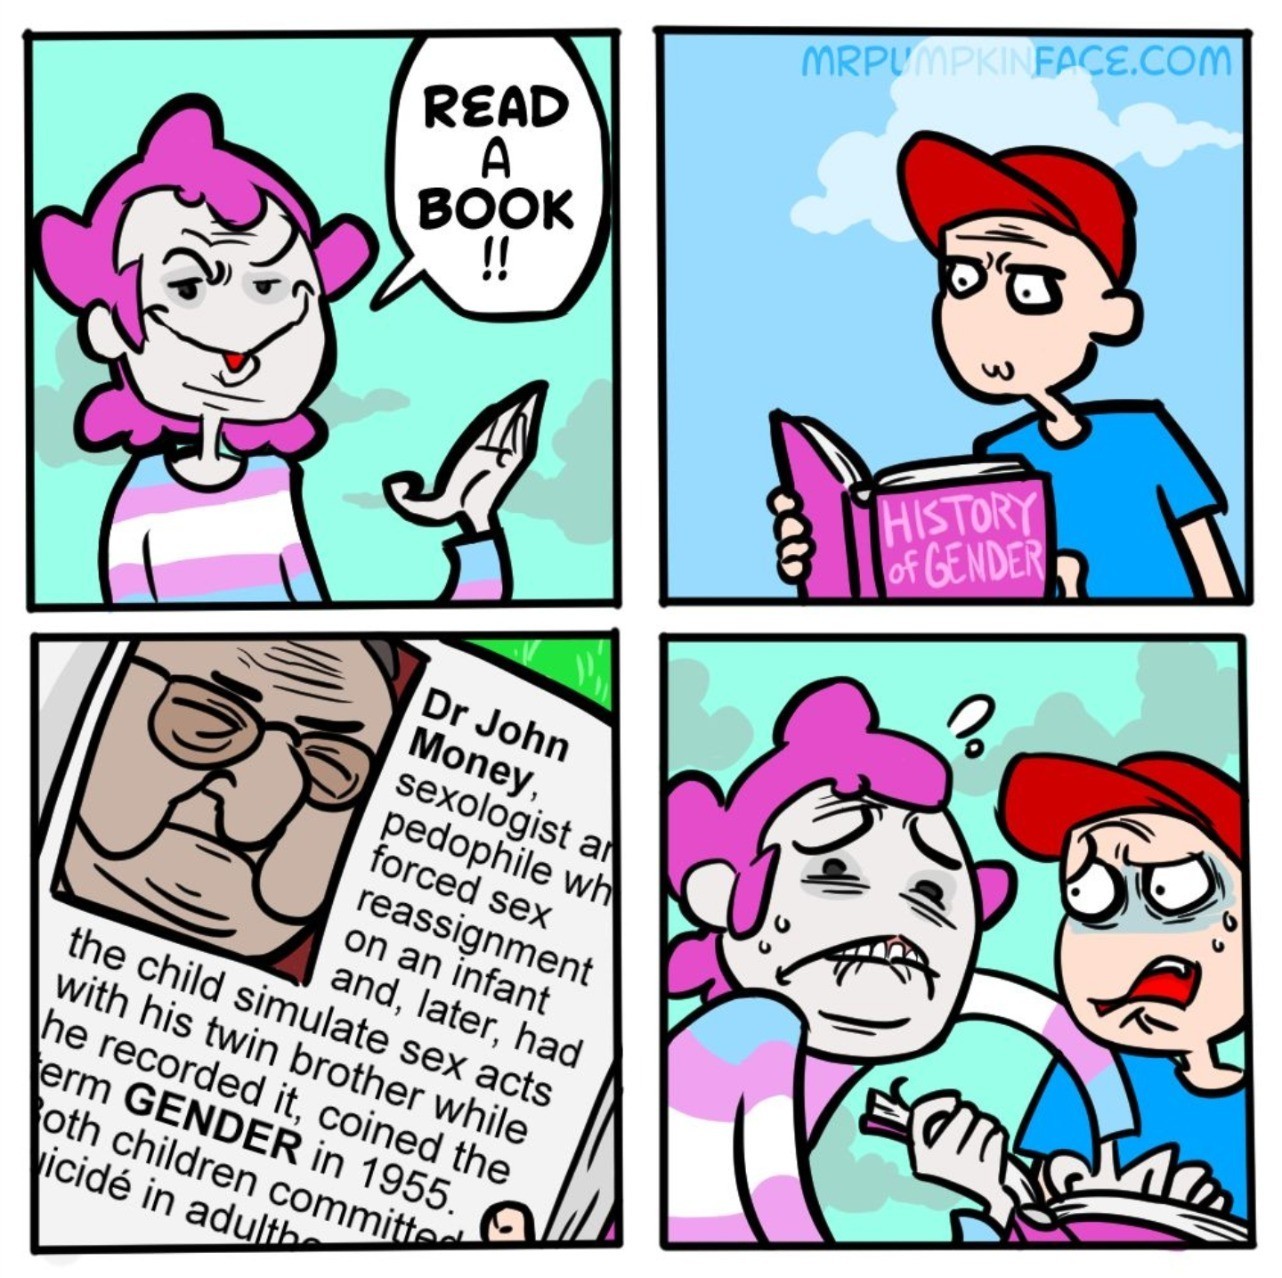 dongs in a book - meme